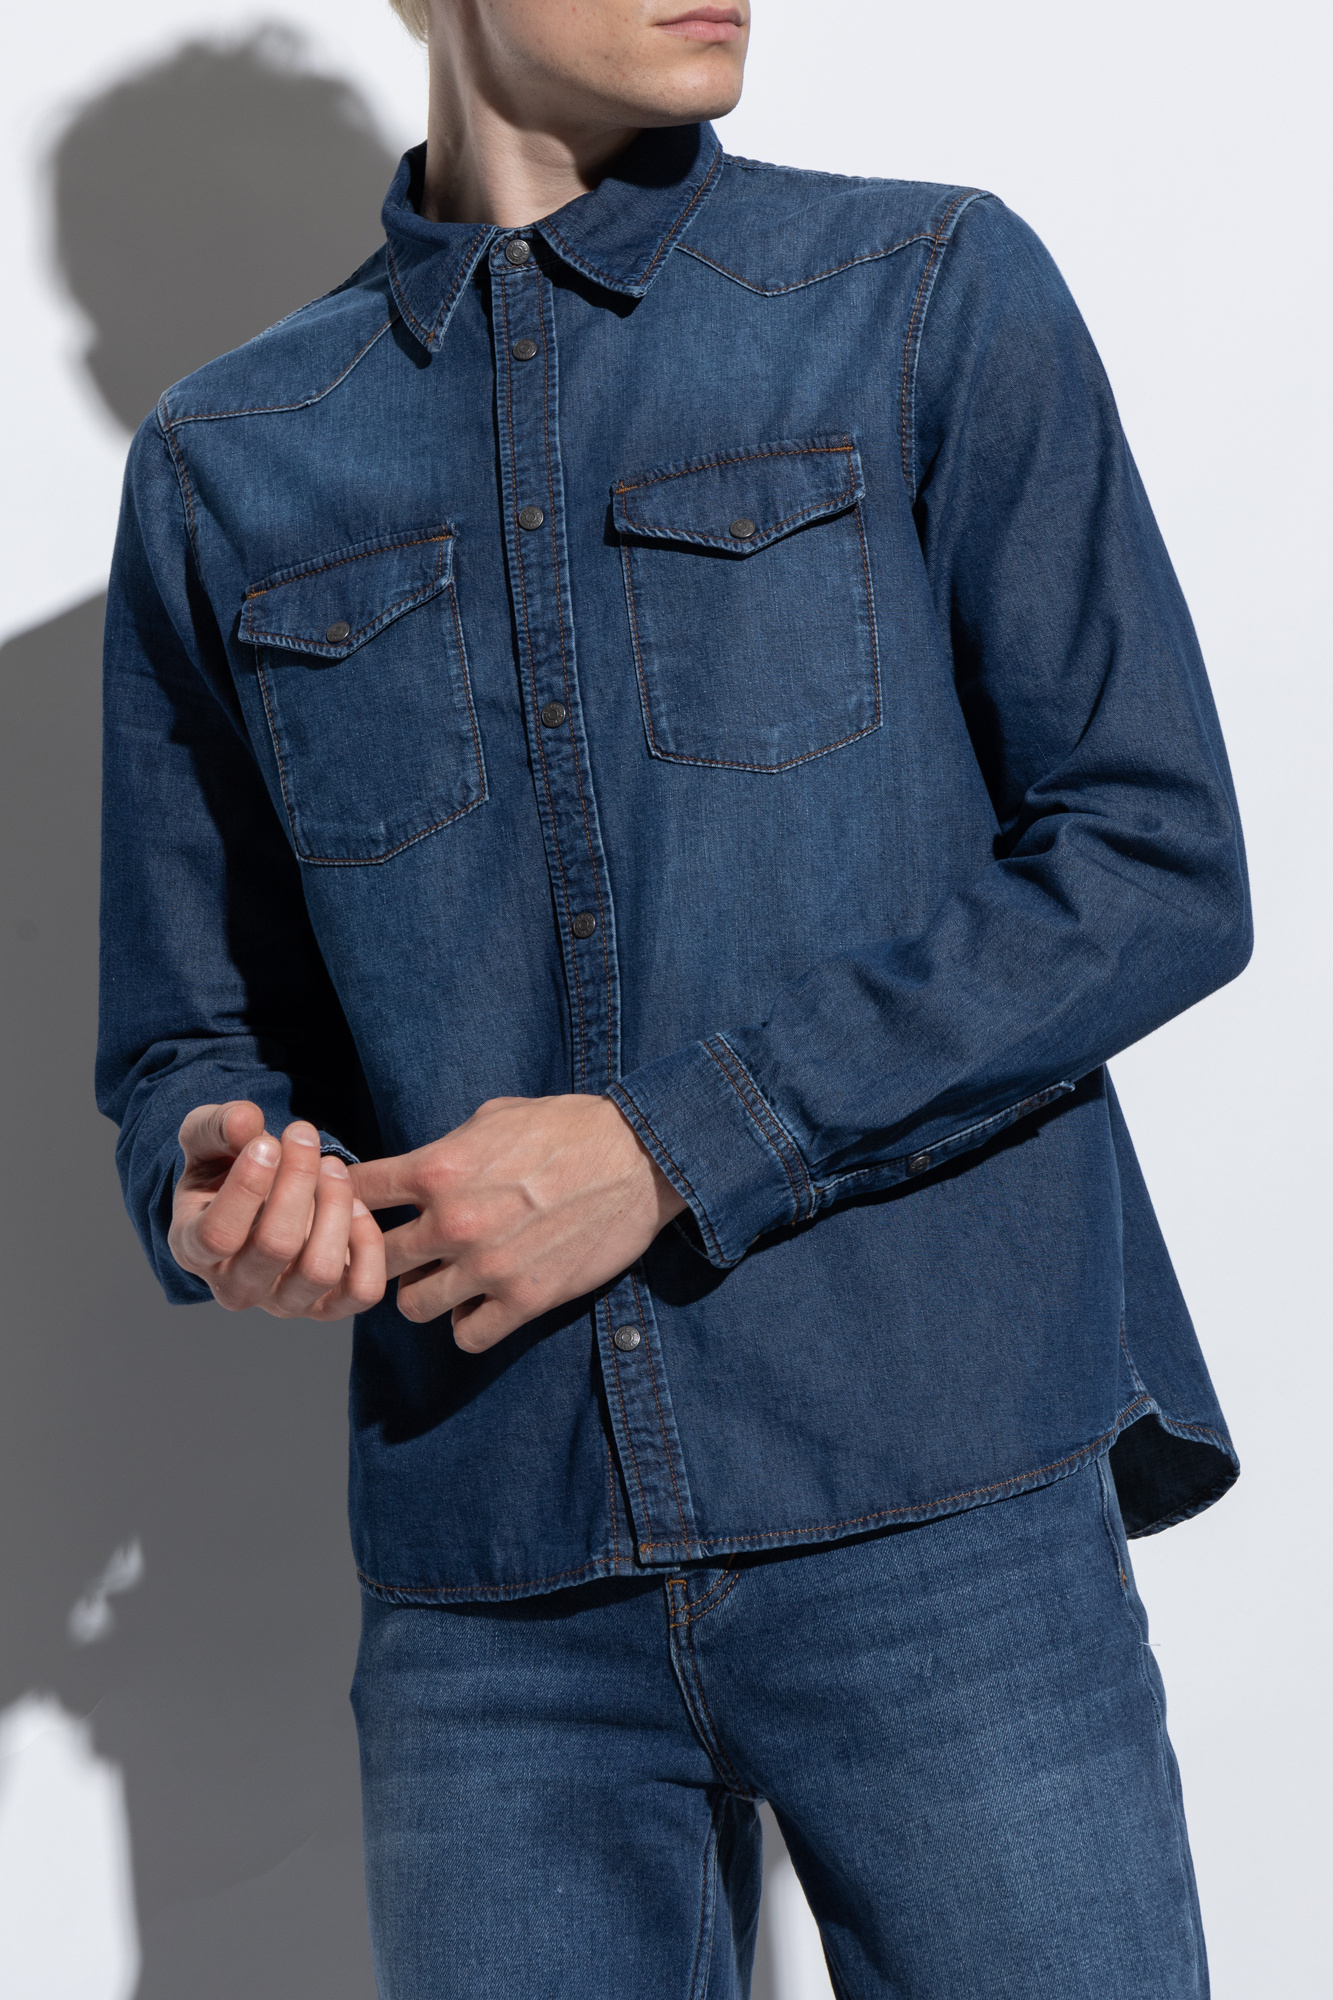 isabel marant etoile gabadi wool jacket ‘Stan’ shirt from ‘XO Project’ capsule collection